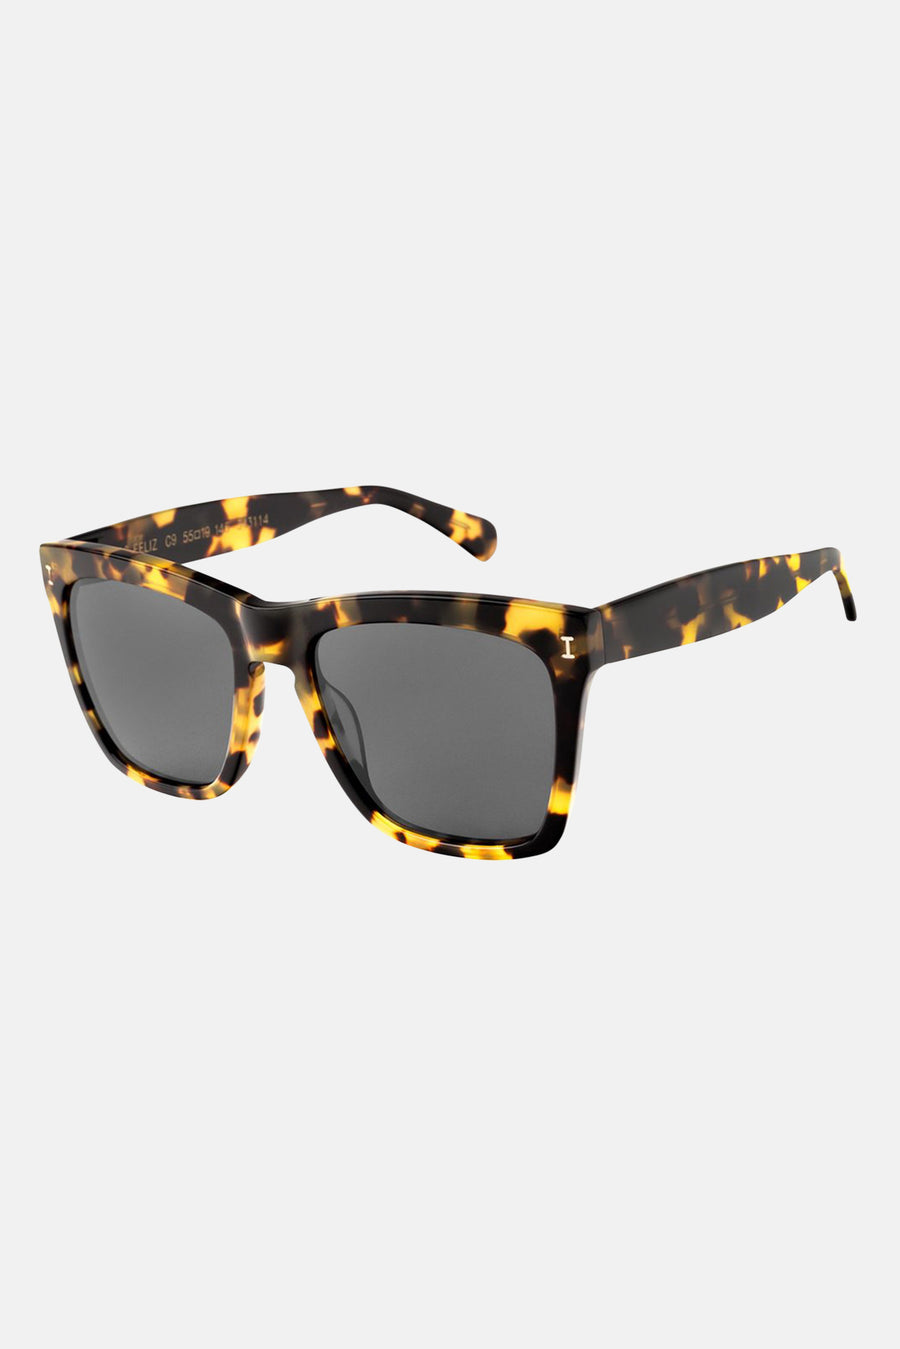 Los Feliz Sunglasses Tortoise/Grey - blueandcream